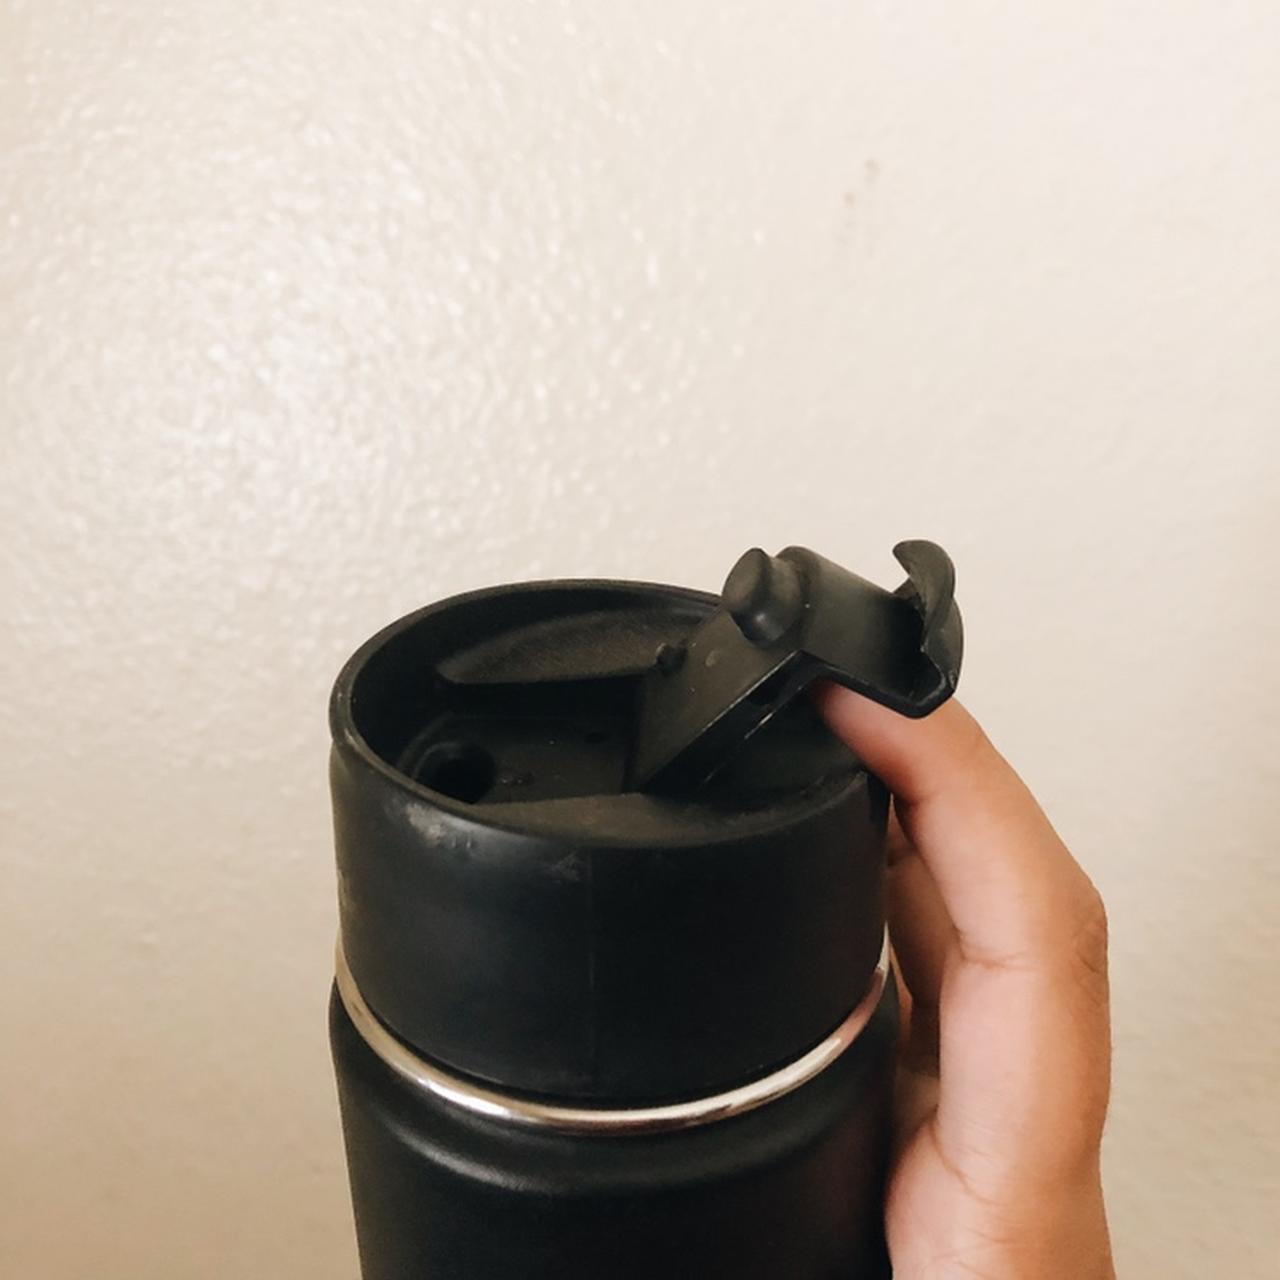 Hydro Flask Travel Mug – Columbia River Coffee Roaster